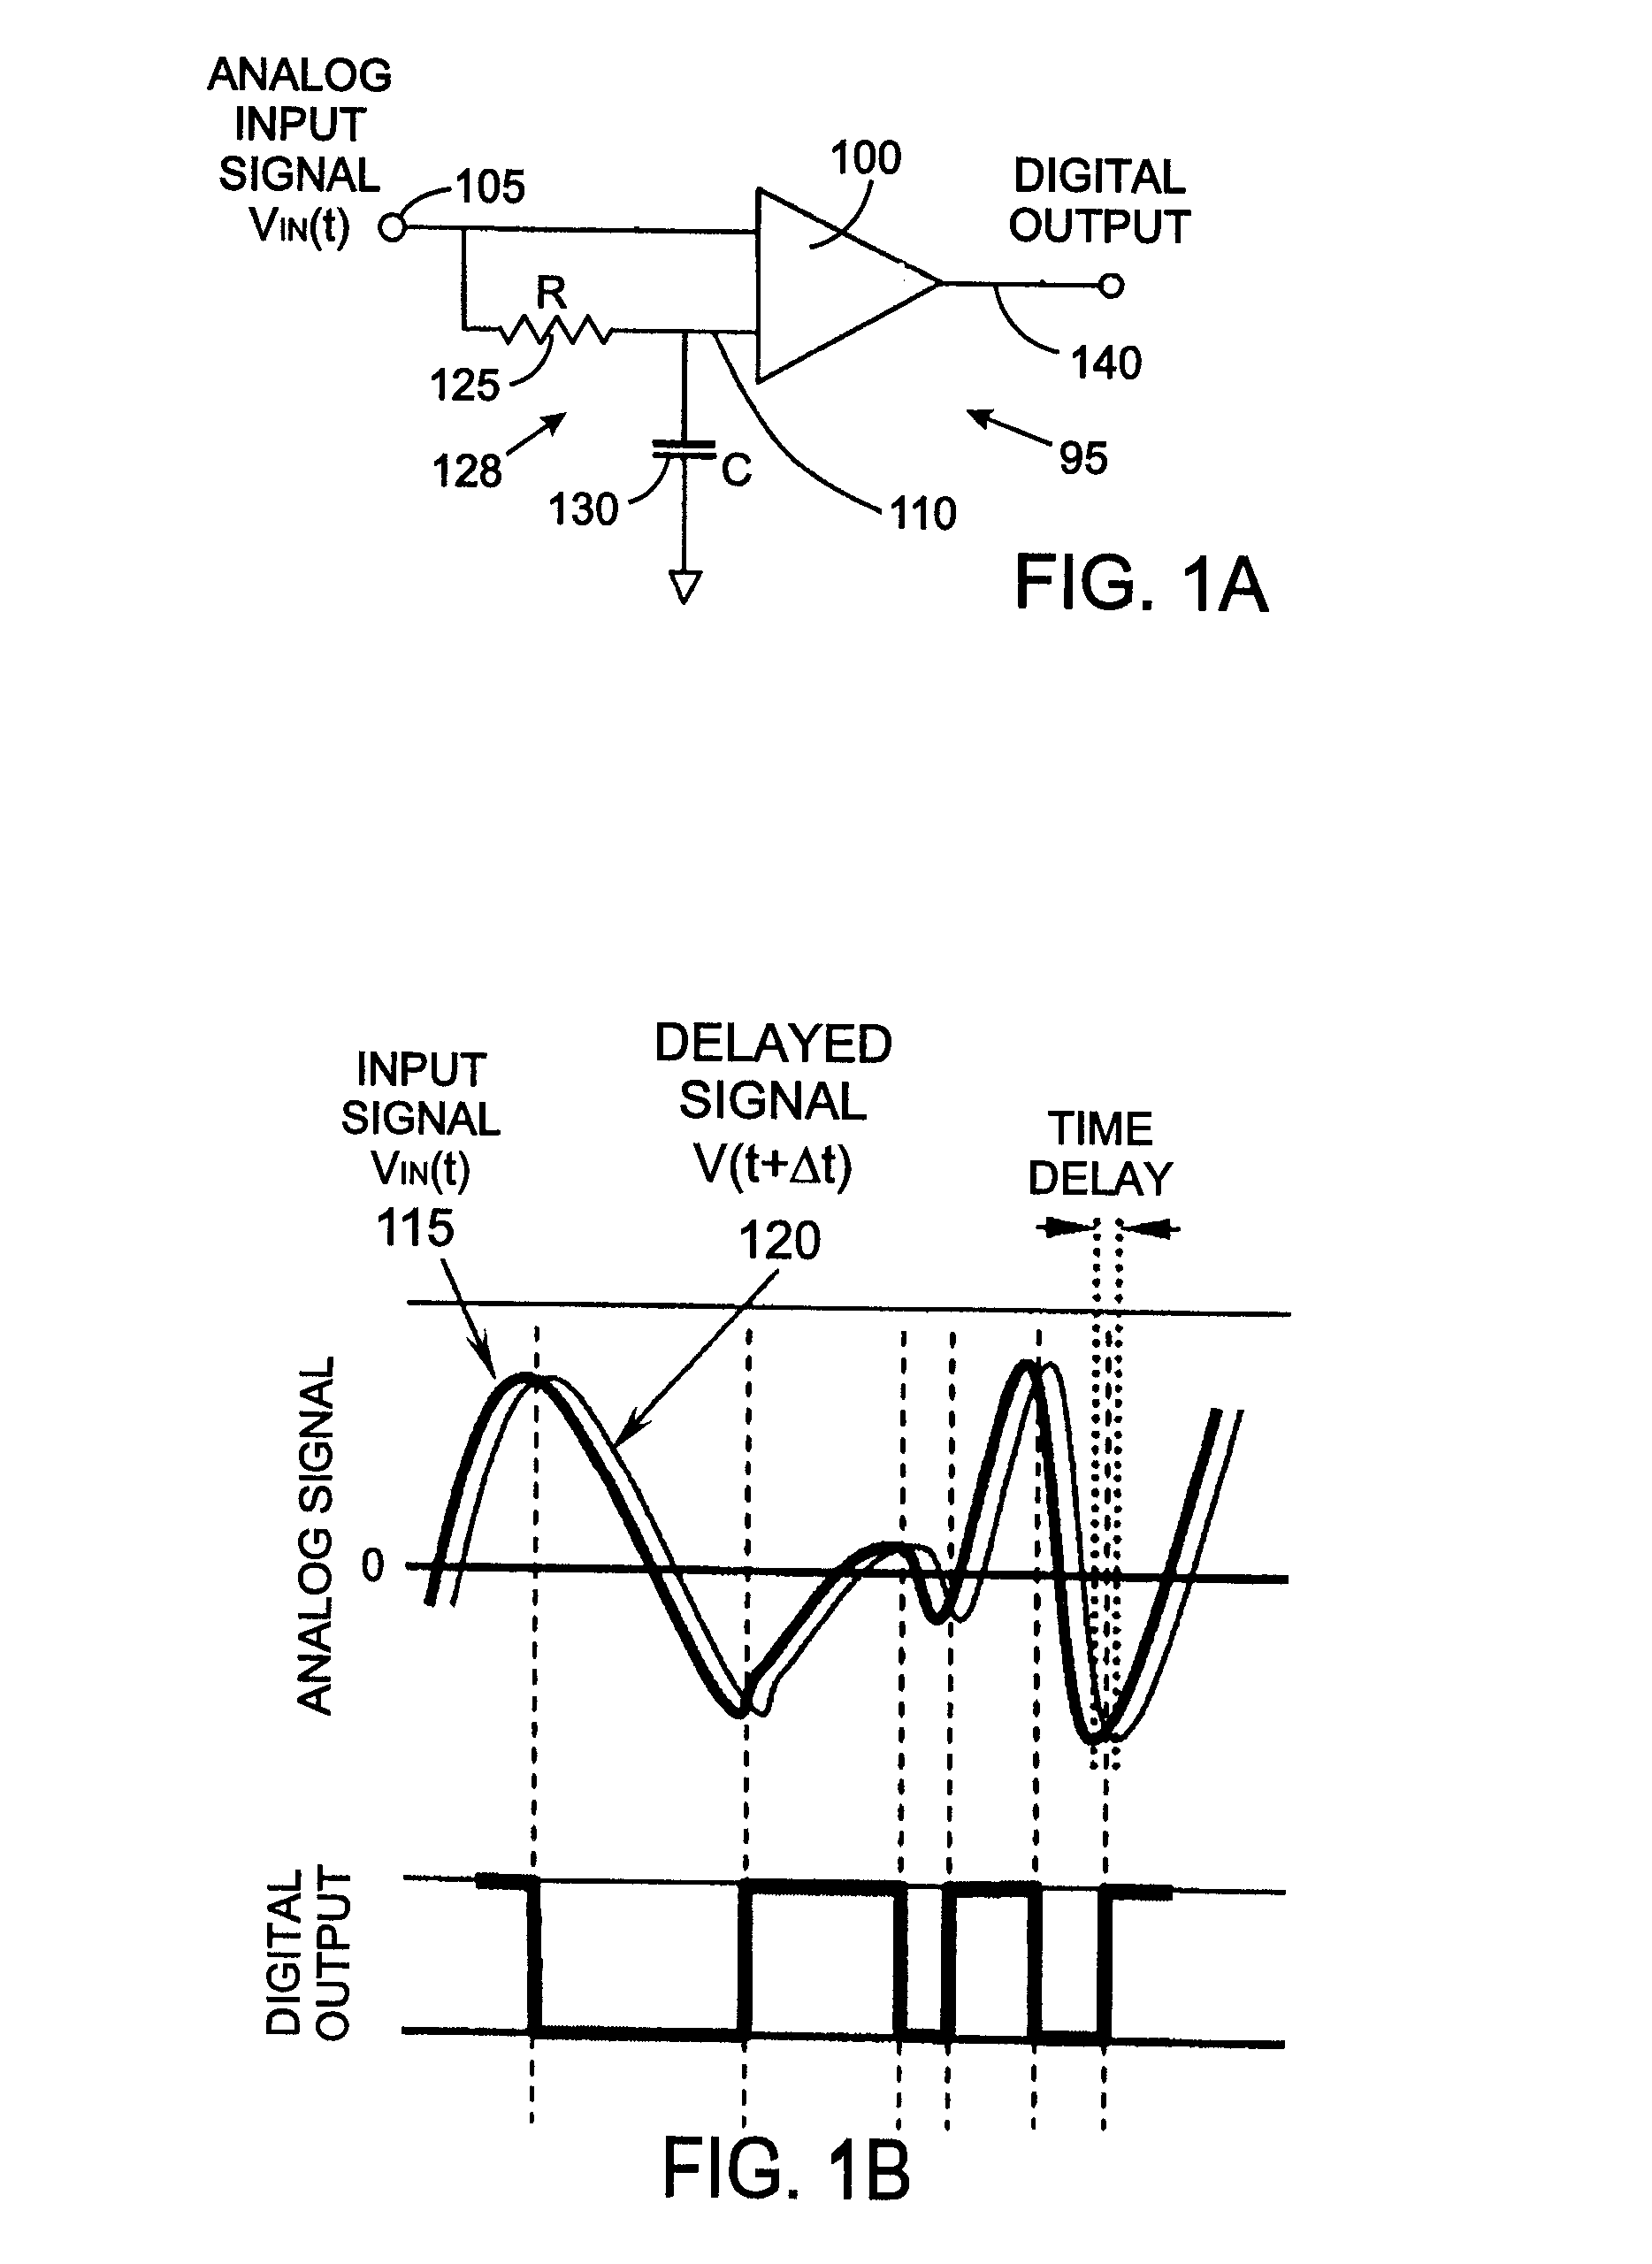 Analog signal transition detector